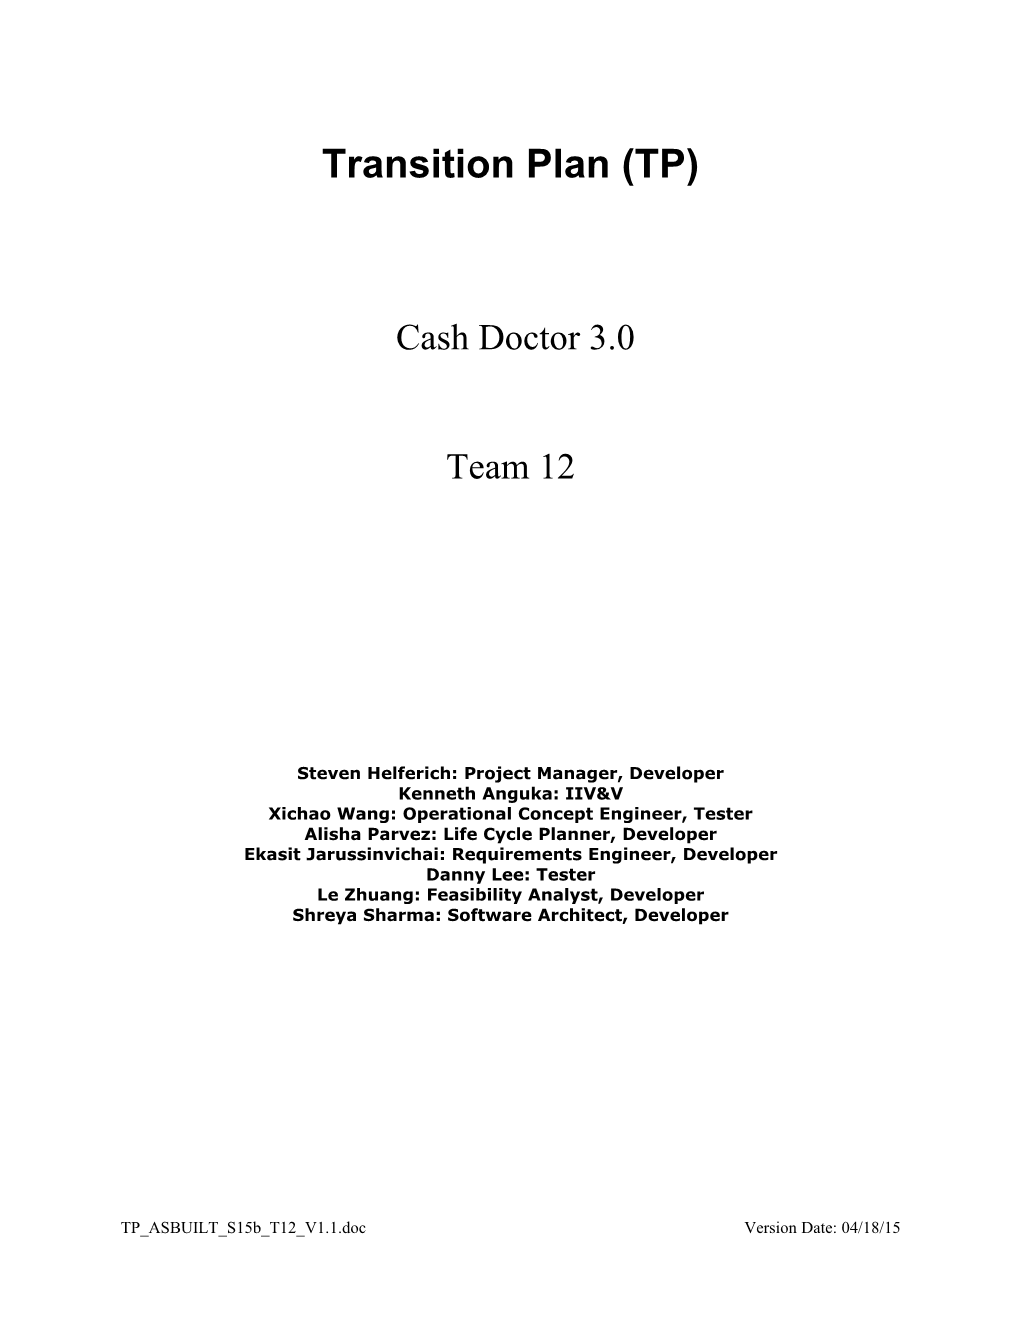 Transition Plan (TP) s1